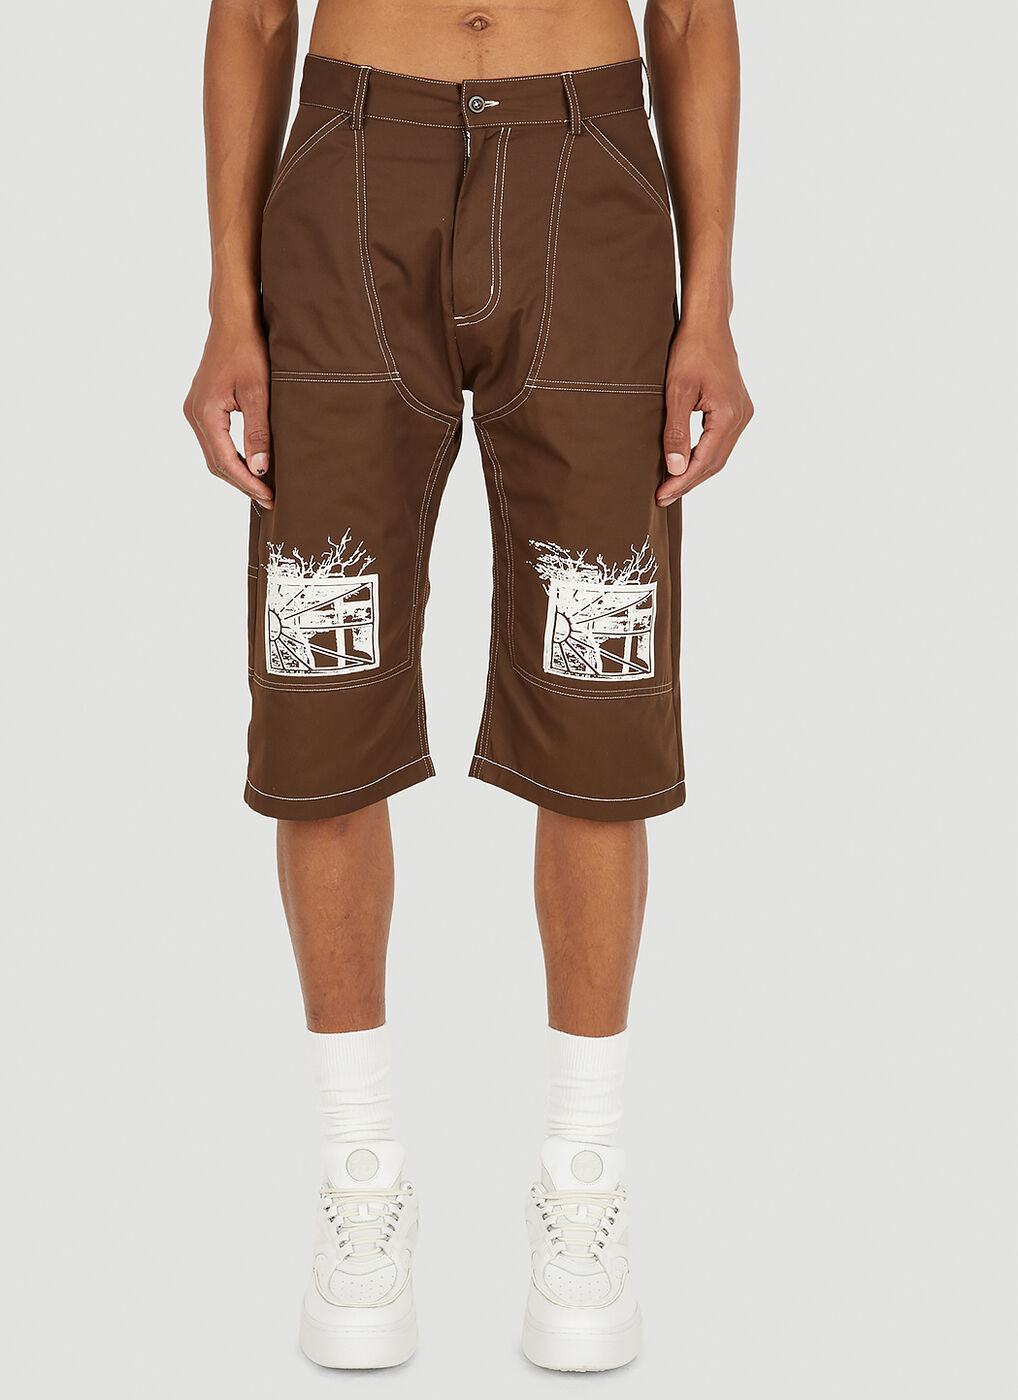 Work Printed Shorts in Brown